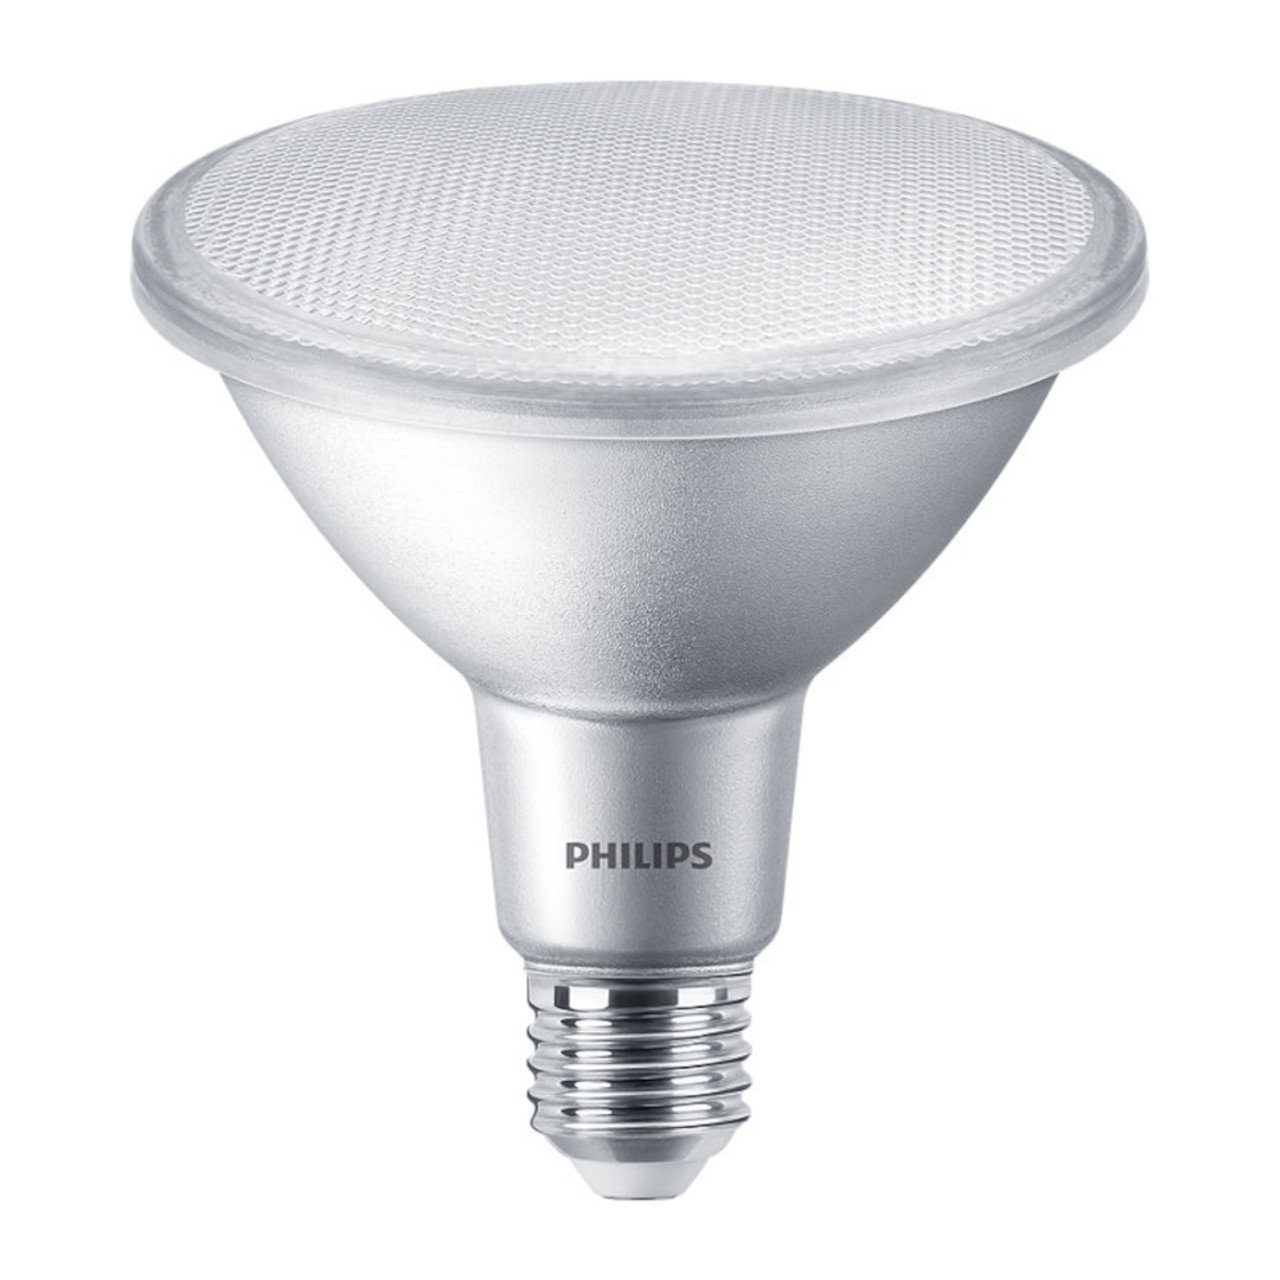 Philips LED PAR38 13W (100W) Very Warm White E27 RA90 25 Degrees